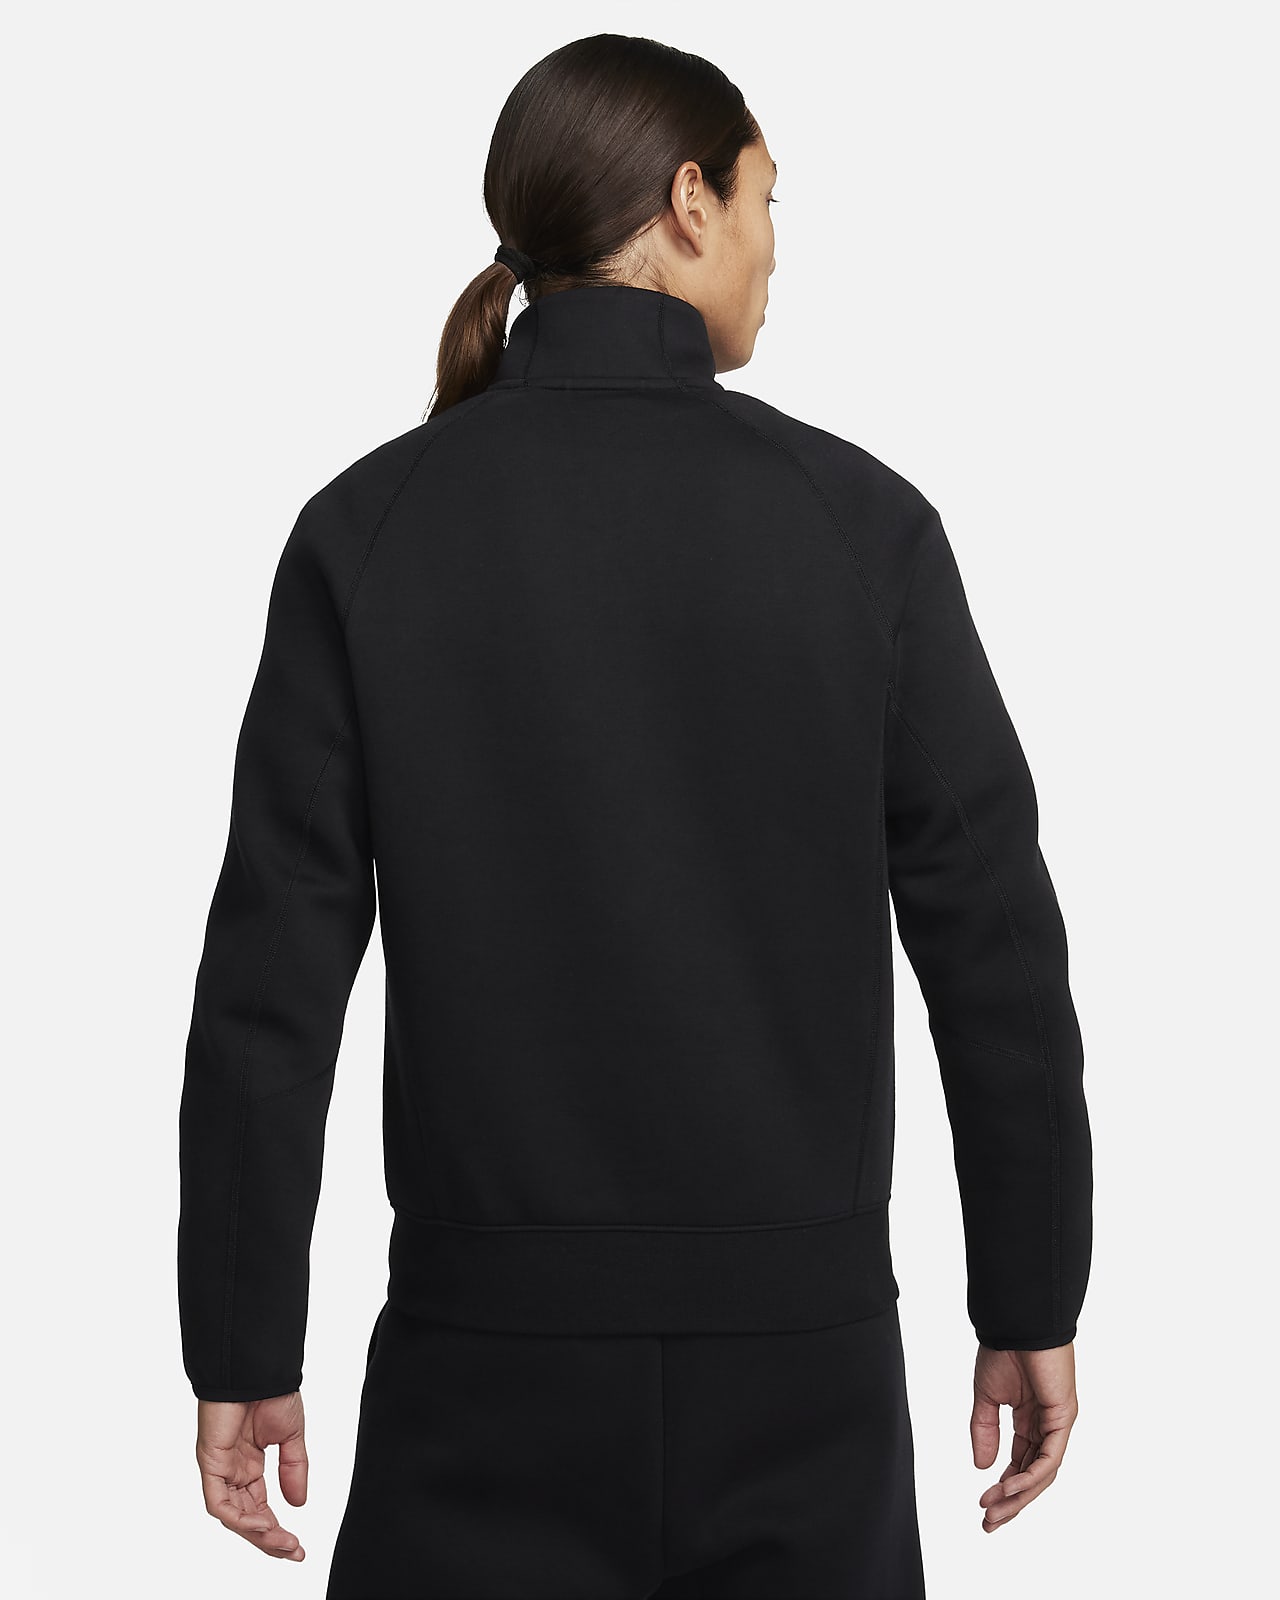 Nike, Pants & Jumpsuits, Nike Tech Fleece Jumpsuit Full Set Womens Small  Pants Jacket Retail 22